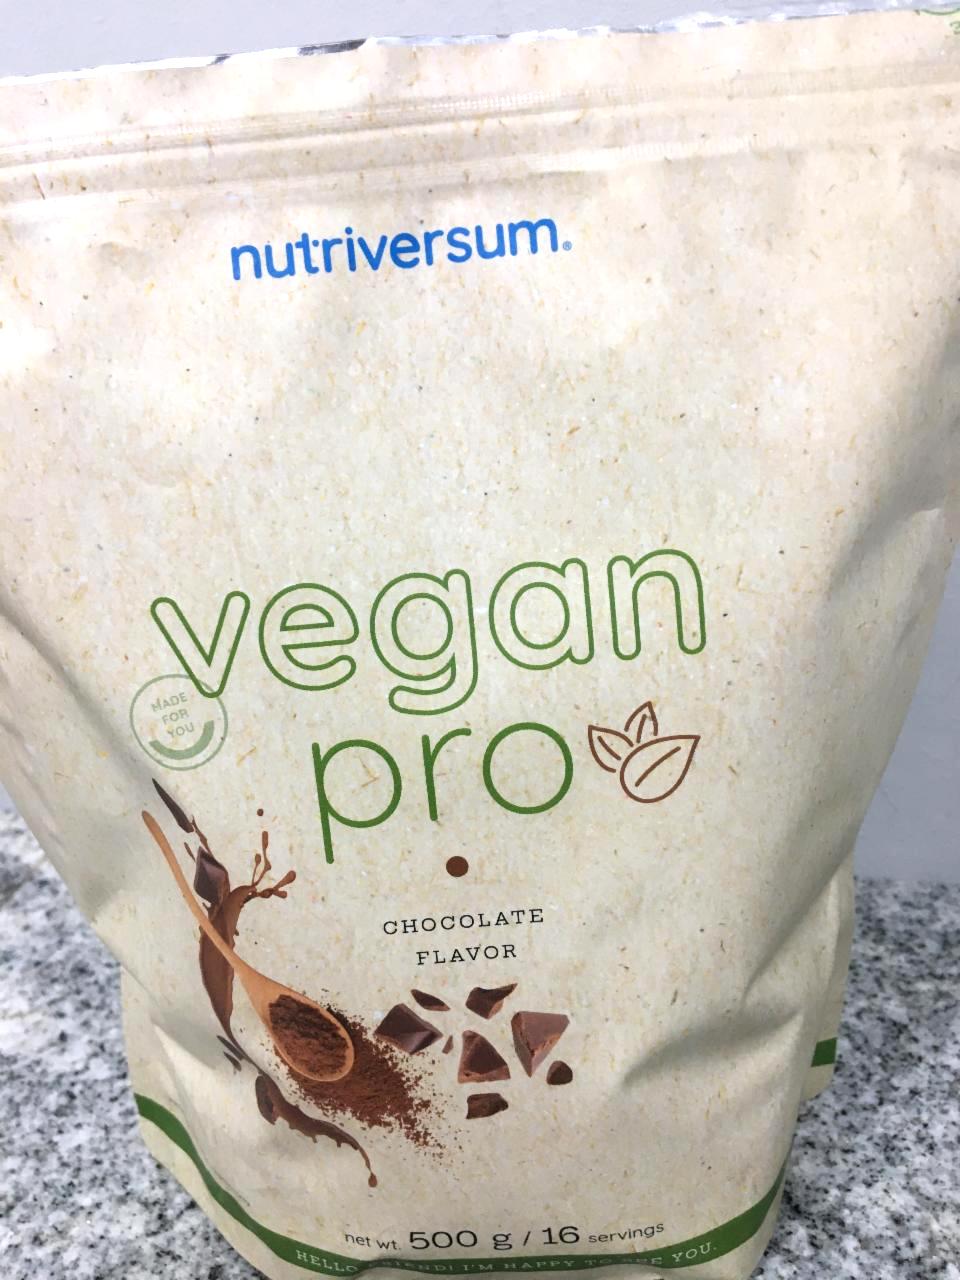 Képek - Vegan pro Chocolate flavor Nutriversum